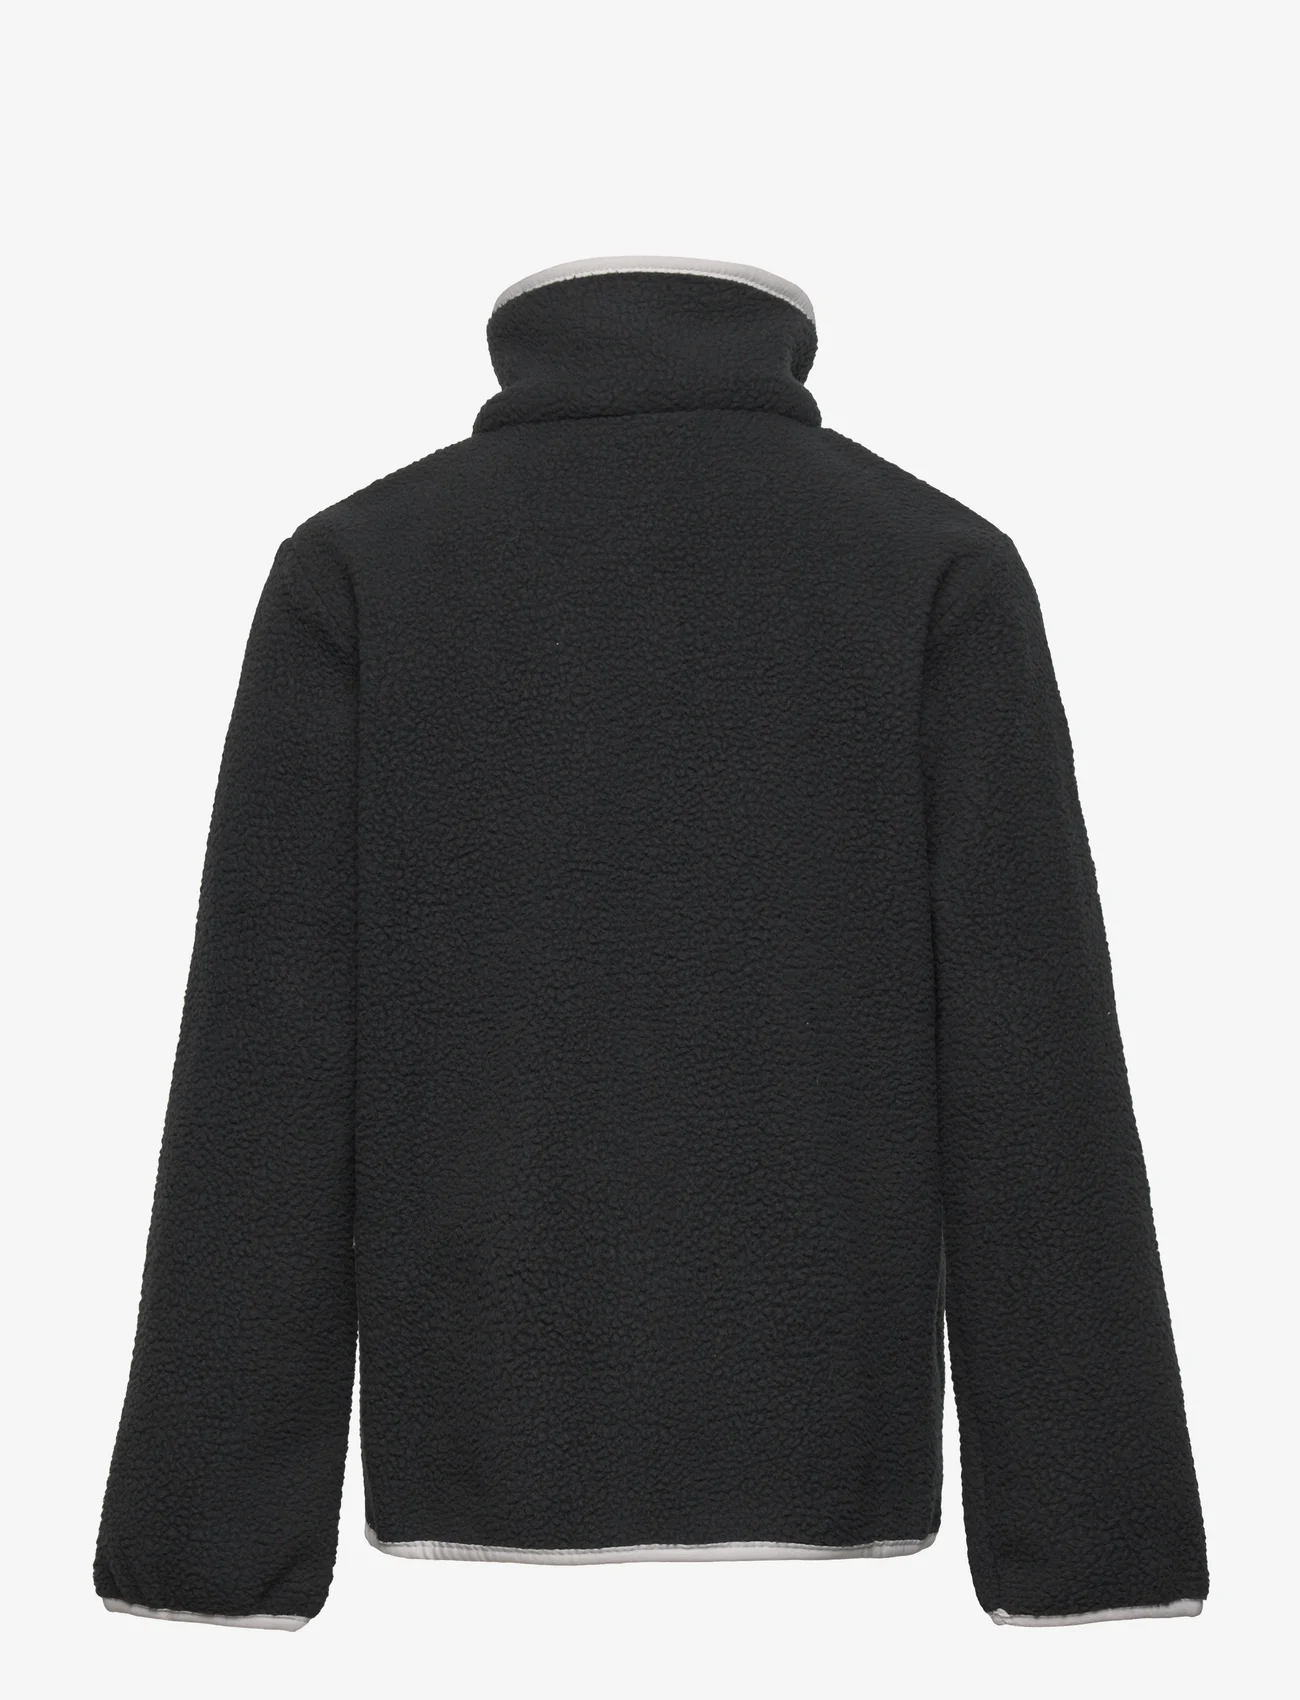 Columbia Sportswear - Helvetia Half Snap Fleece - fleece jacket - black, city grey - 1